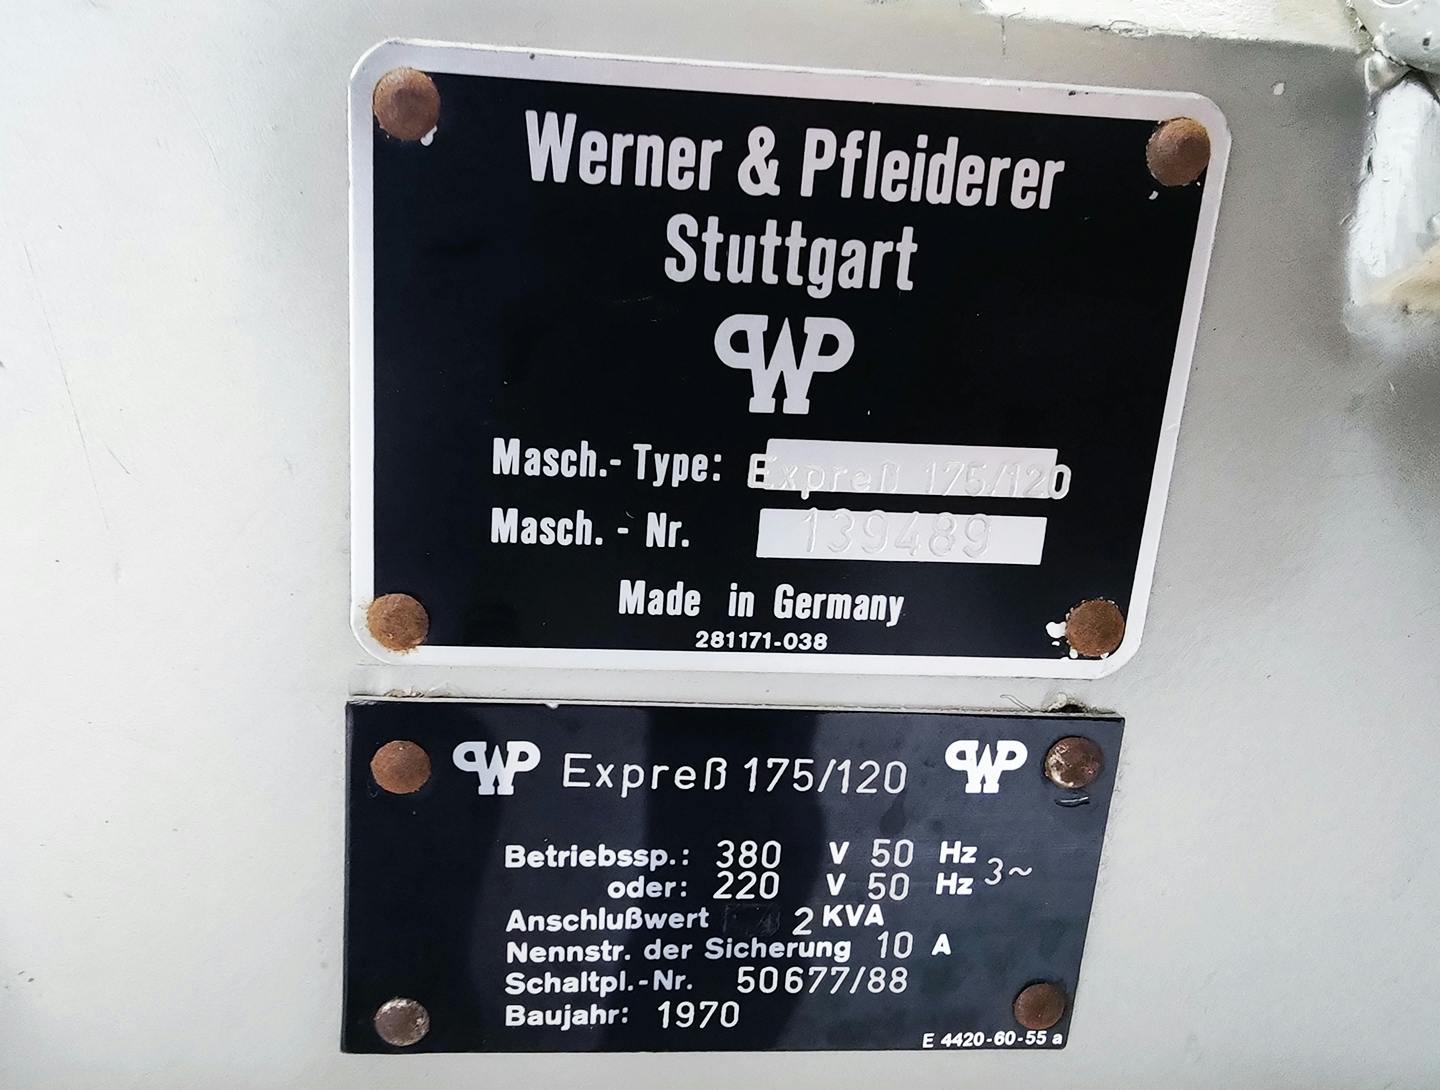 Werner & Pfleiderer Express 175/120 - Ситовый гранулятор - image 9